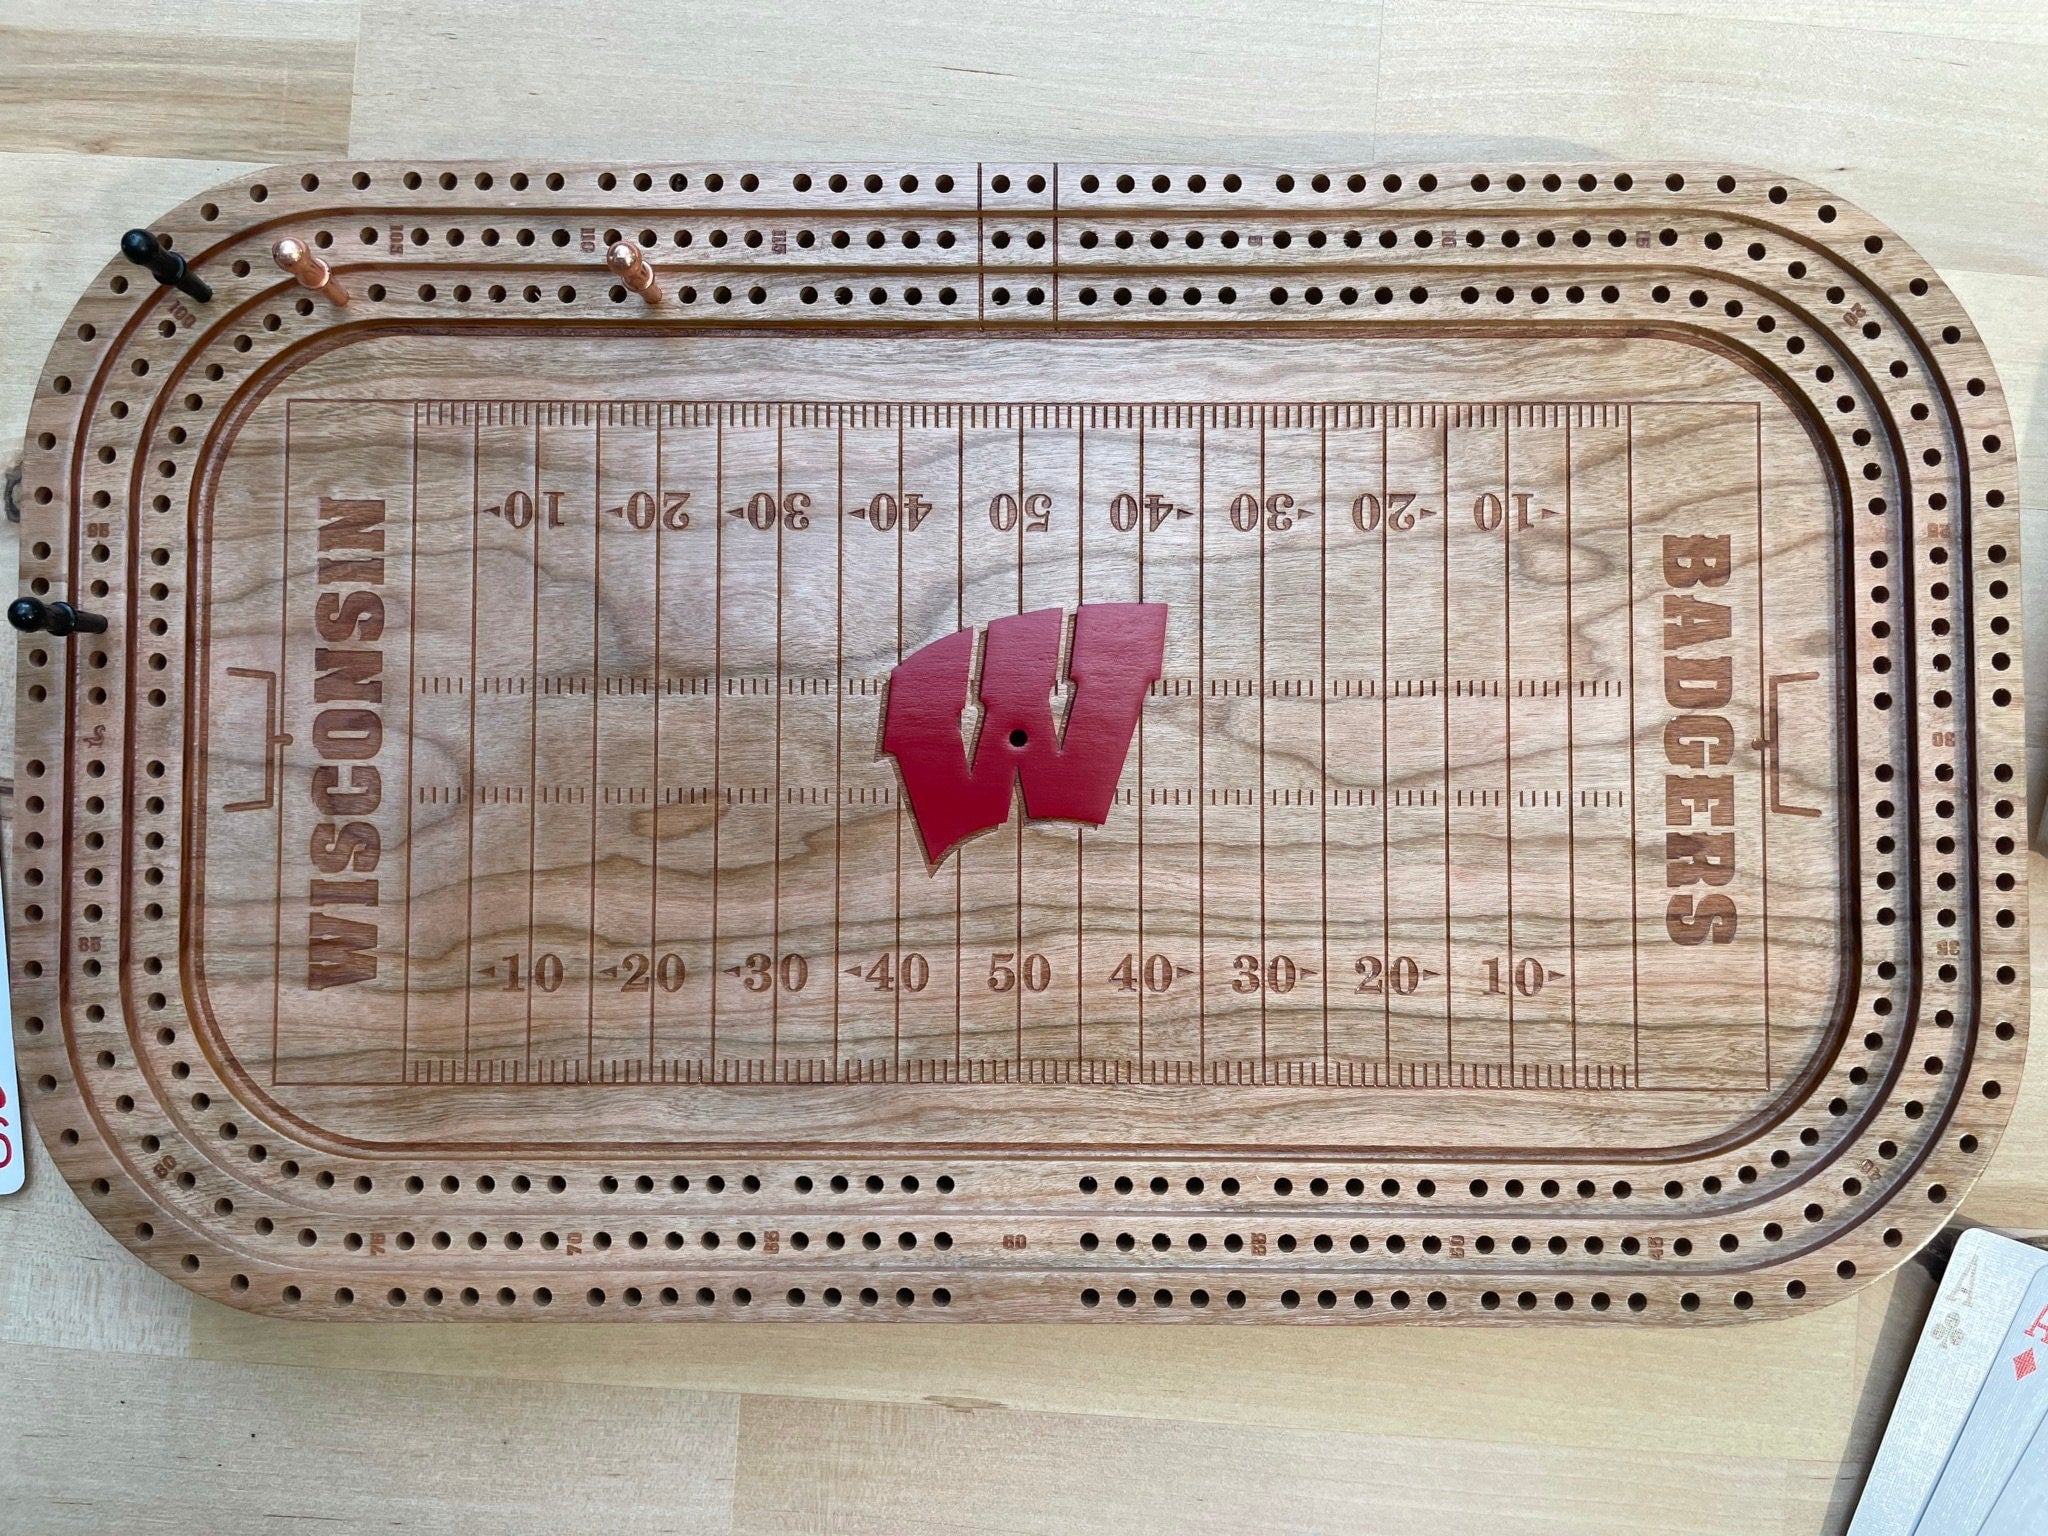 University of Wisconsin - Camp Randall Stadium/Badger Hockey - Cribbage Board & Wall Display